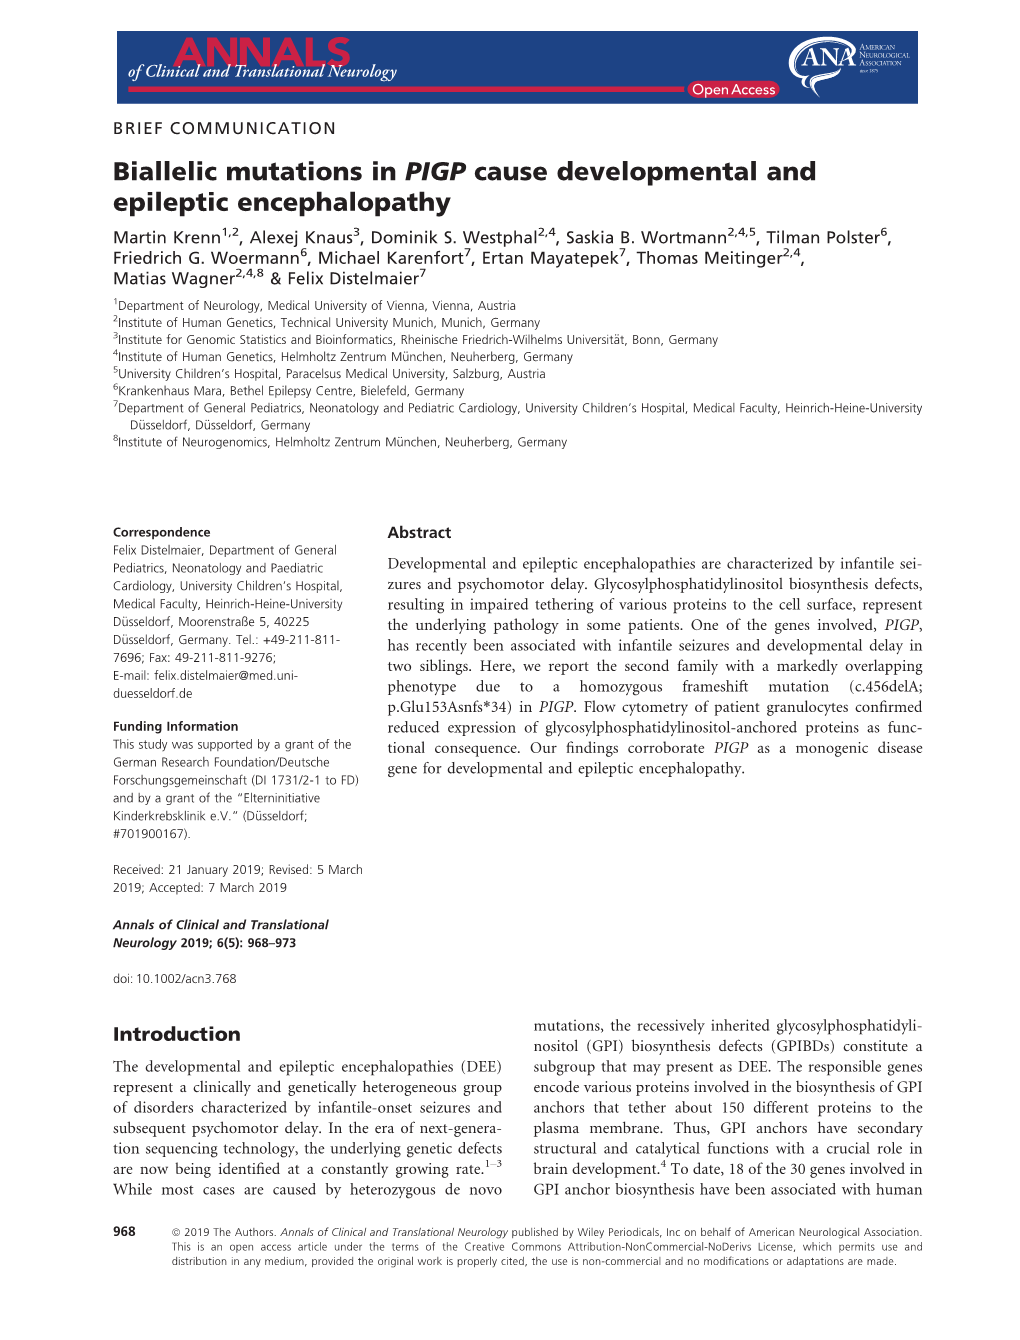 Biallelic Mutations in PIGP Cause Developmental and Epileptic Encephalopathy Martin Krenn1,2, Alexej Knaus3, Dominik S